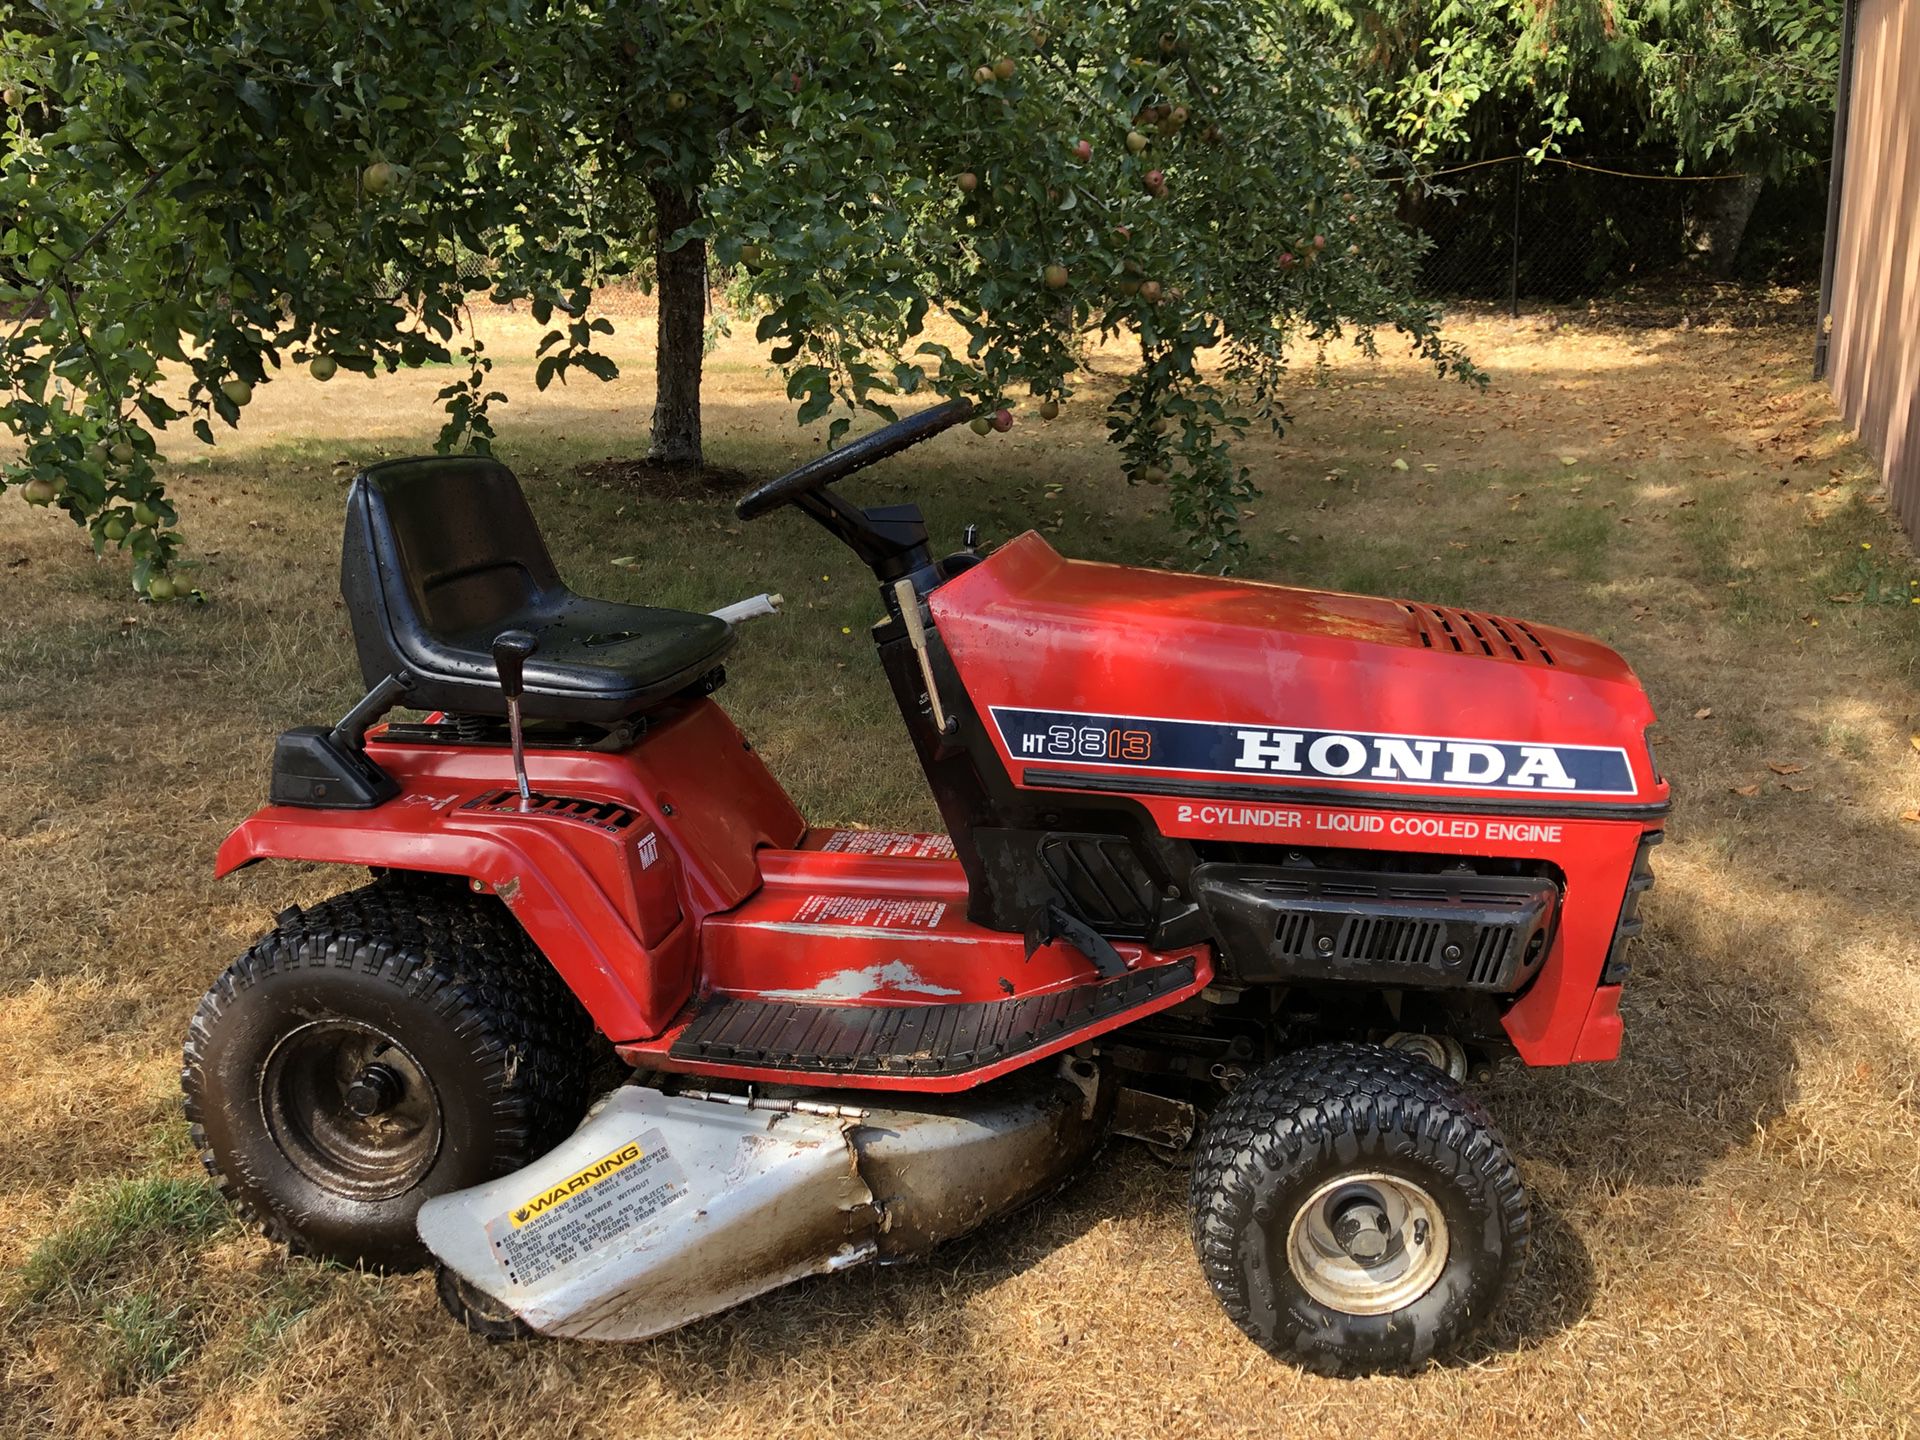 Honda HT3813 riding lawnmower